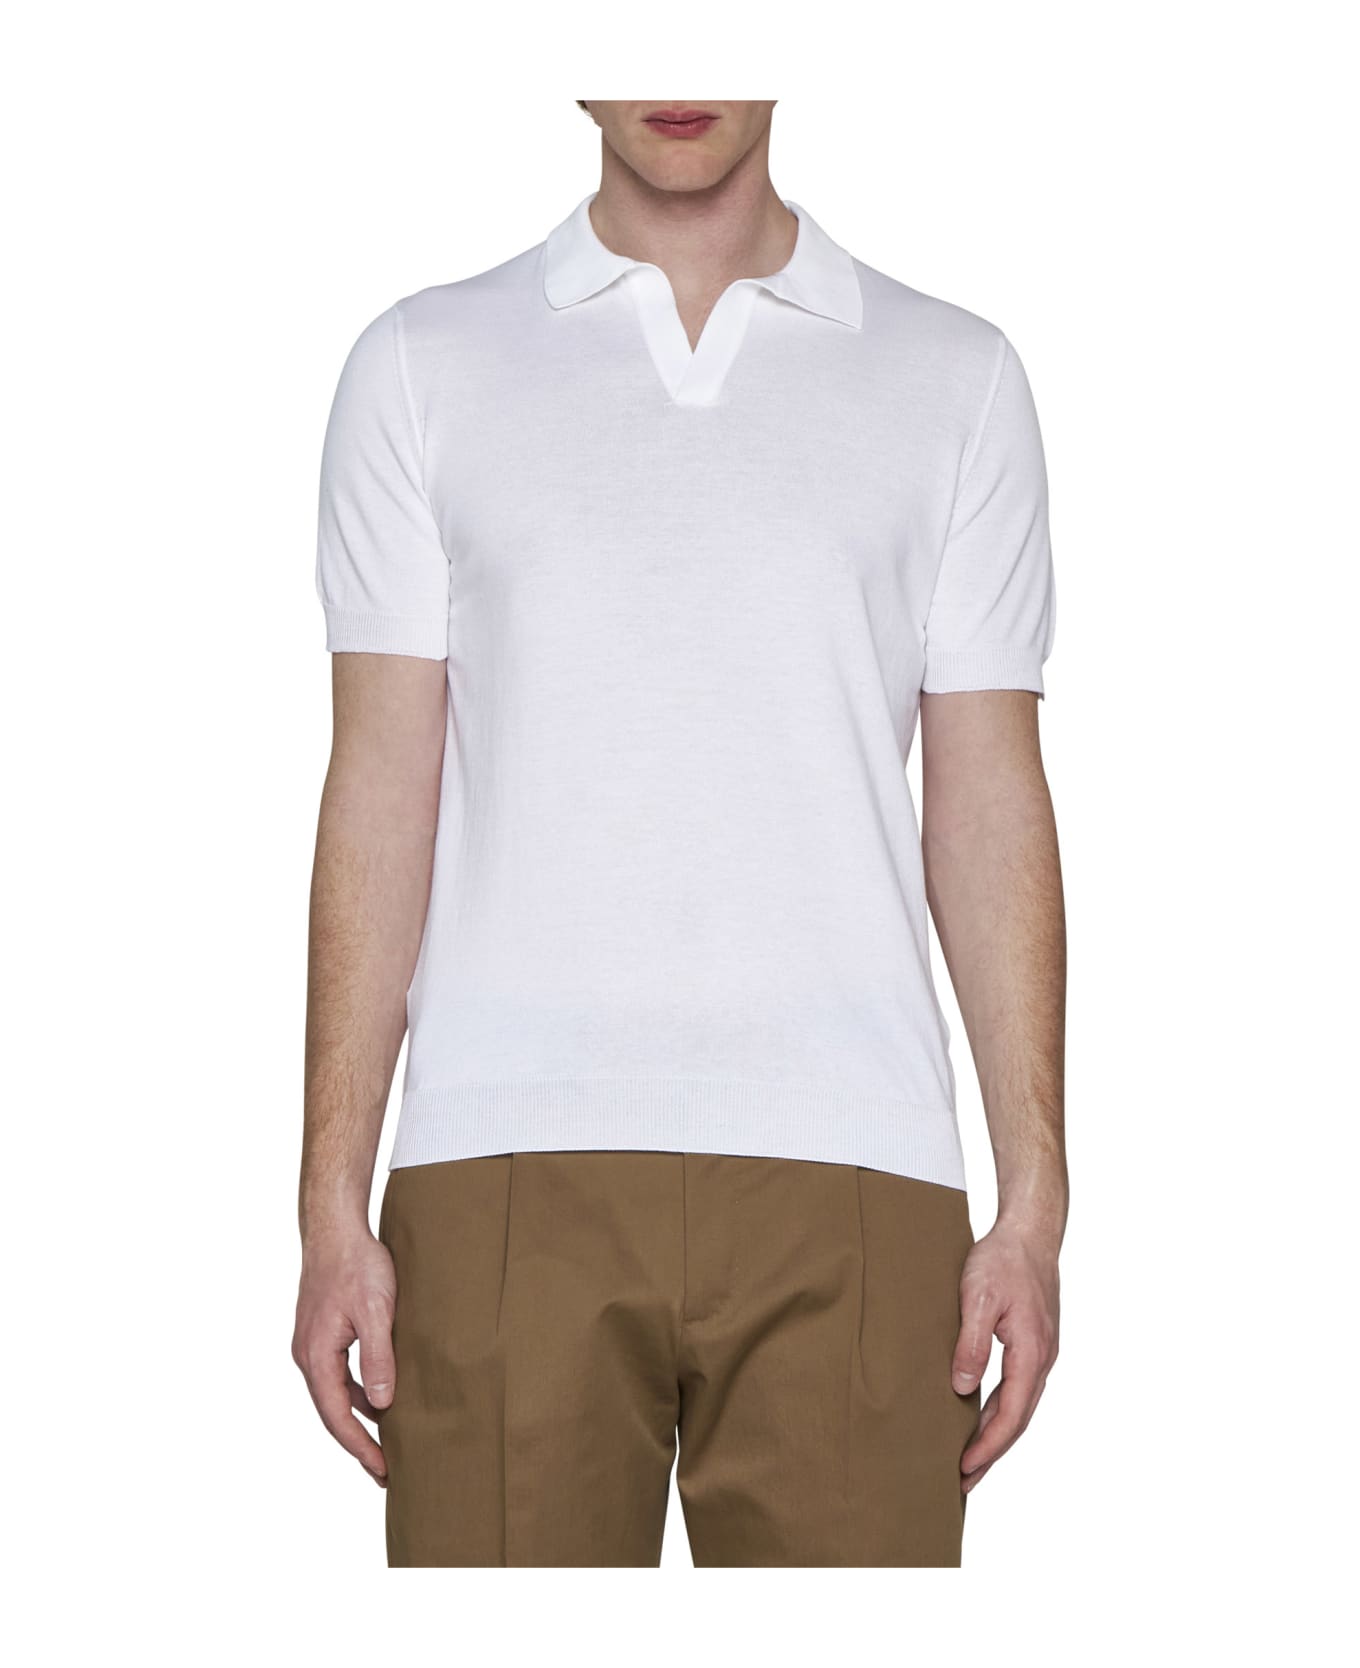 Tagliatore Polo Shirt - Bianco